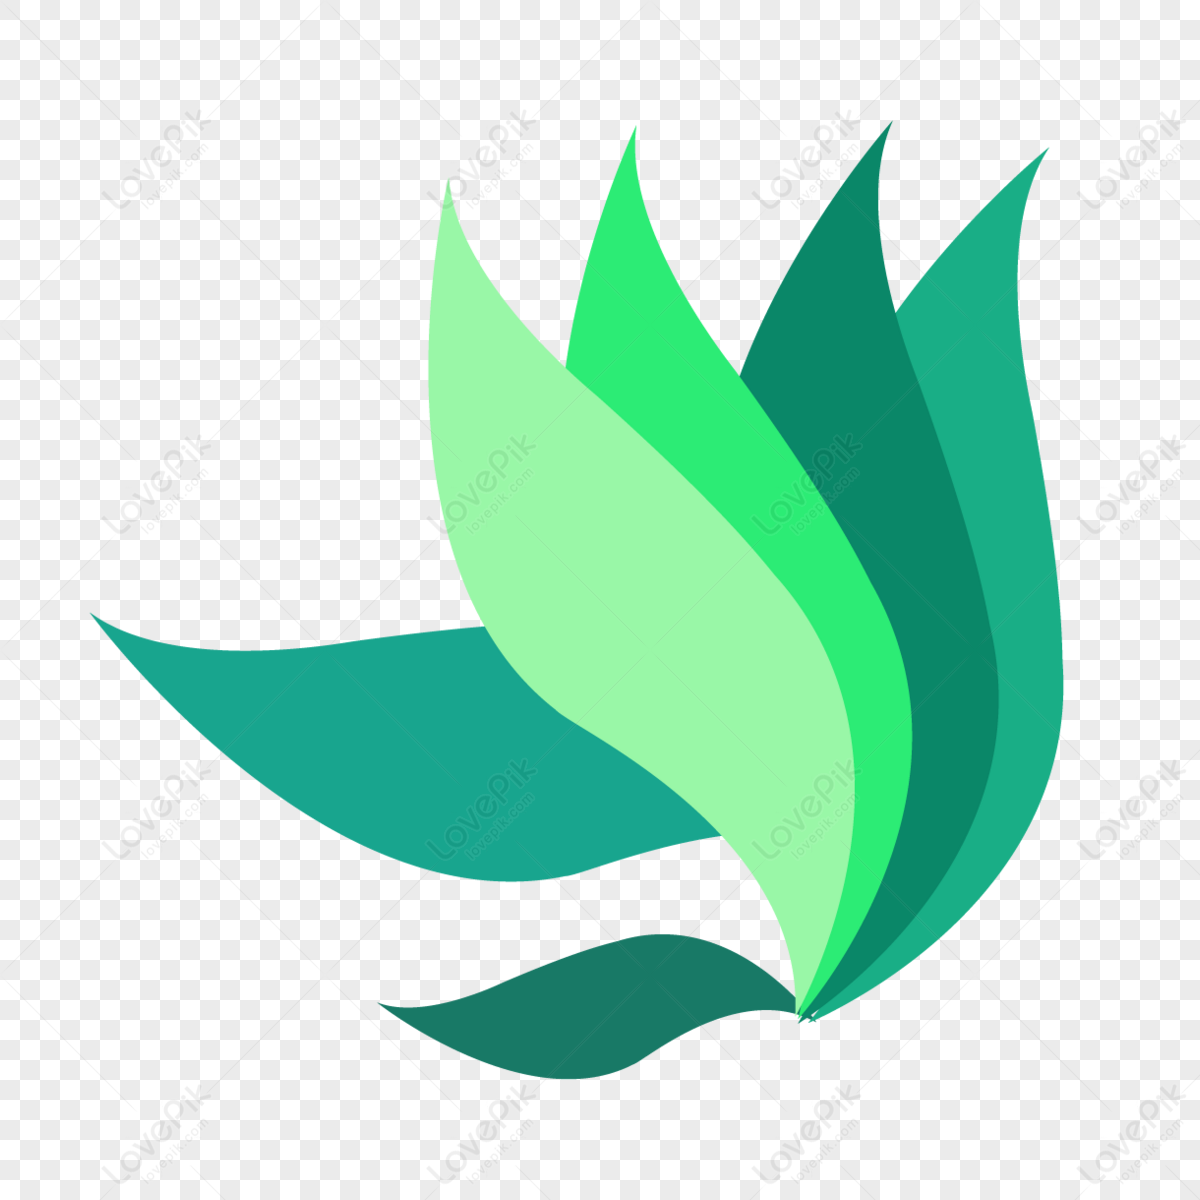 Gear leaf logo design Royalty Free Vector Image